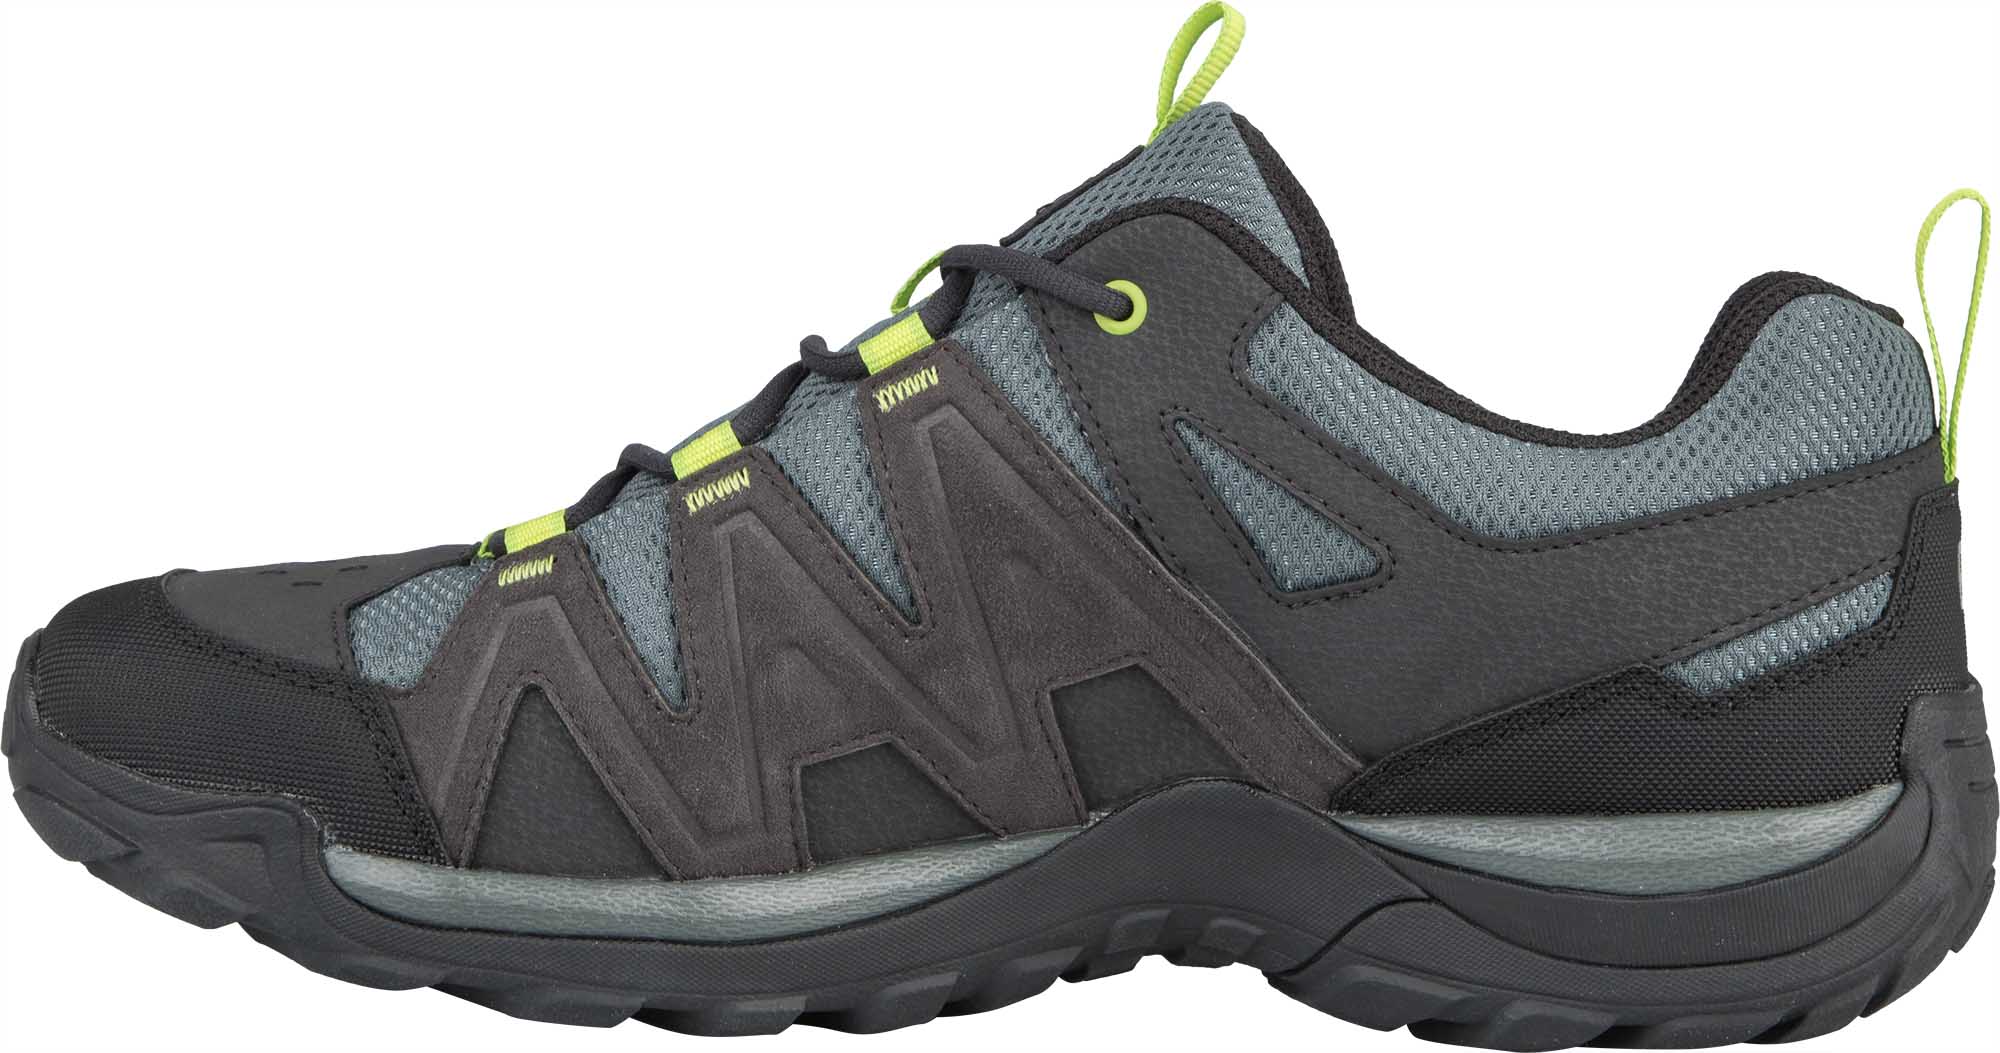 Men’s hiking shoes